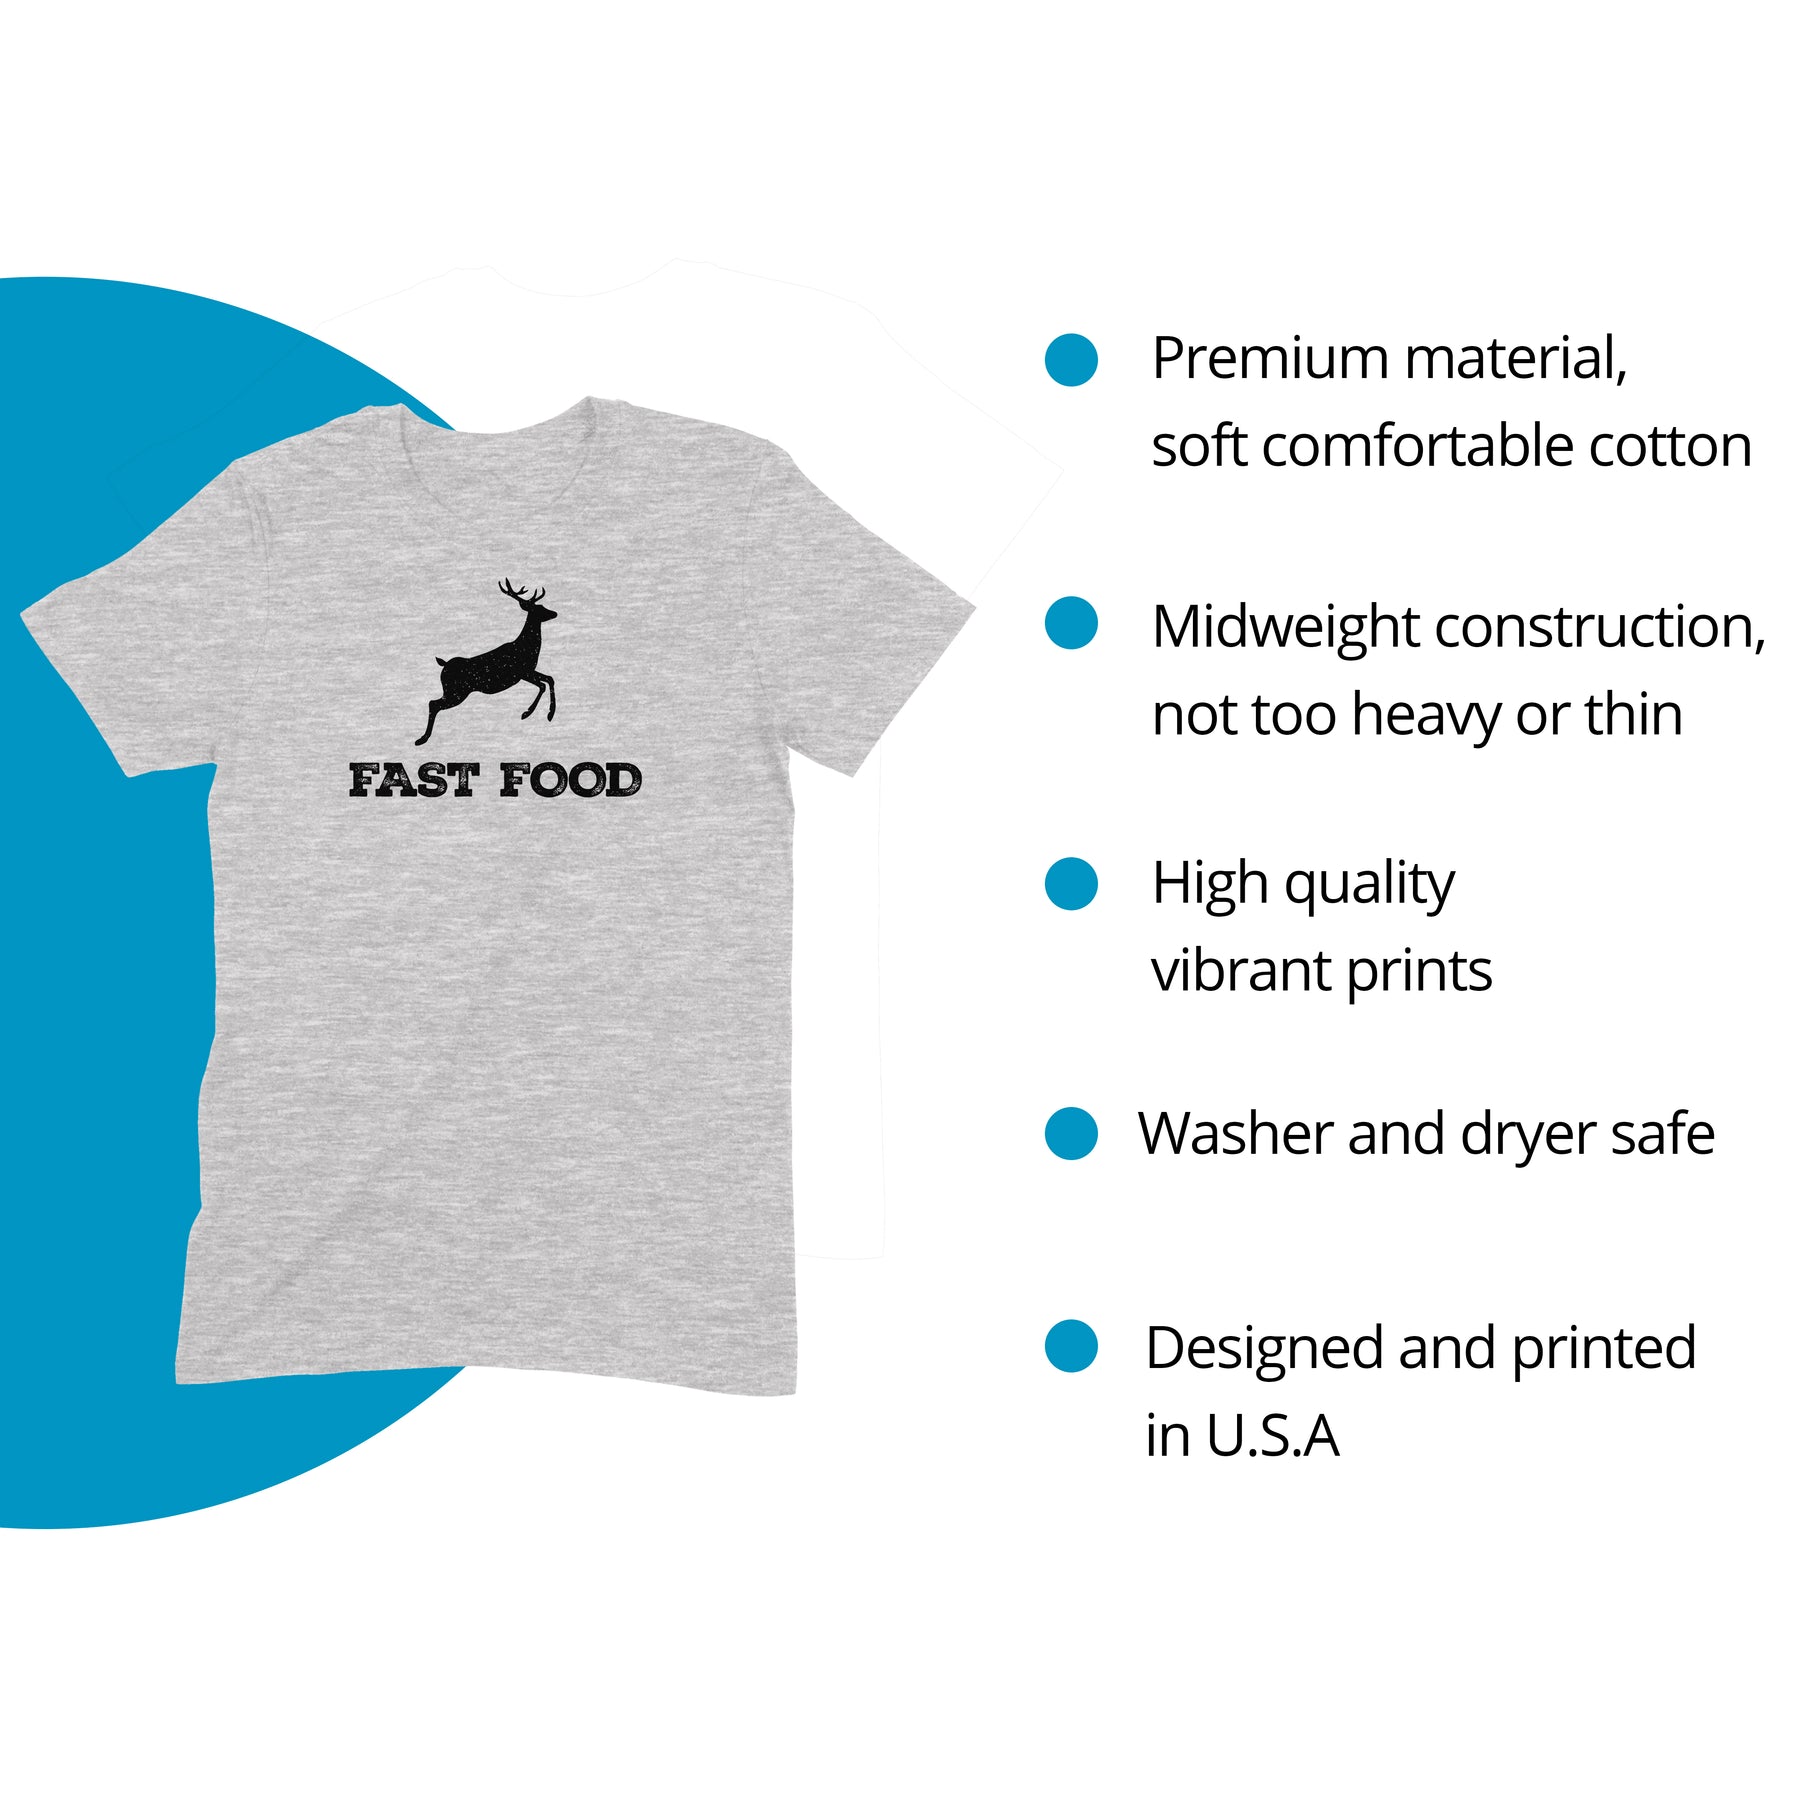 "Fast Food" Premium Midweight Ringspun Cotton T-Shirt - Mens/Womens Fits